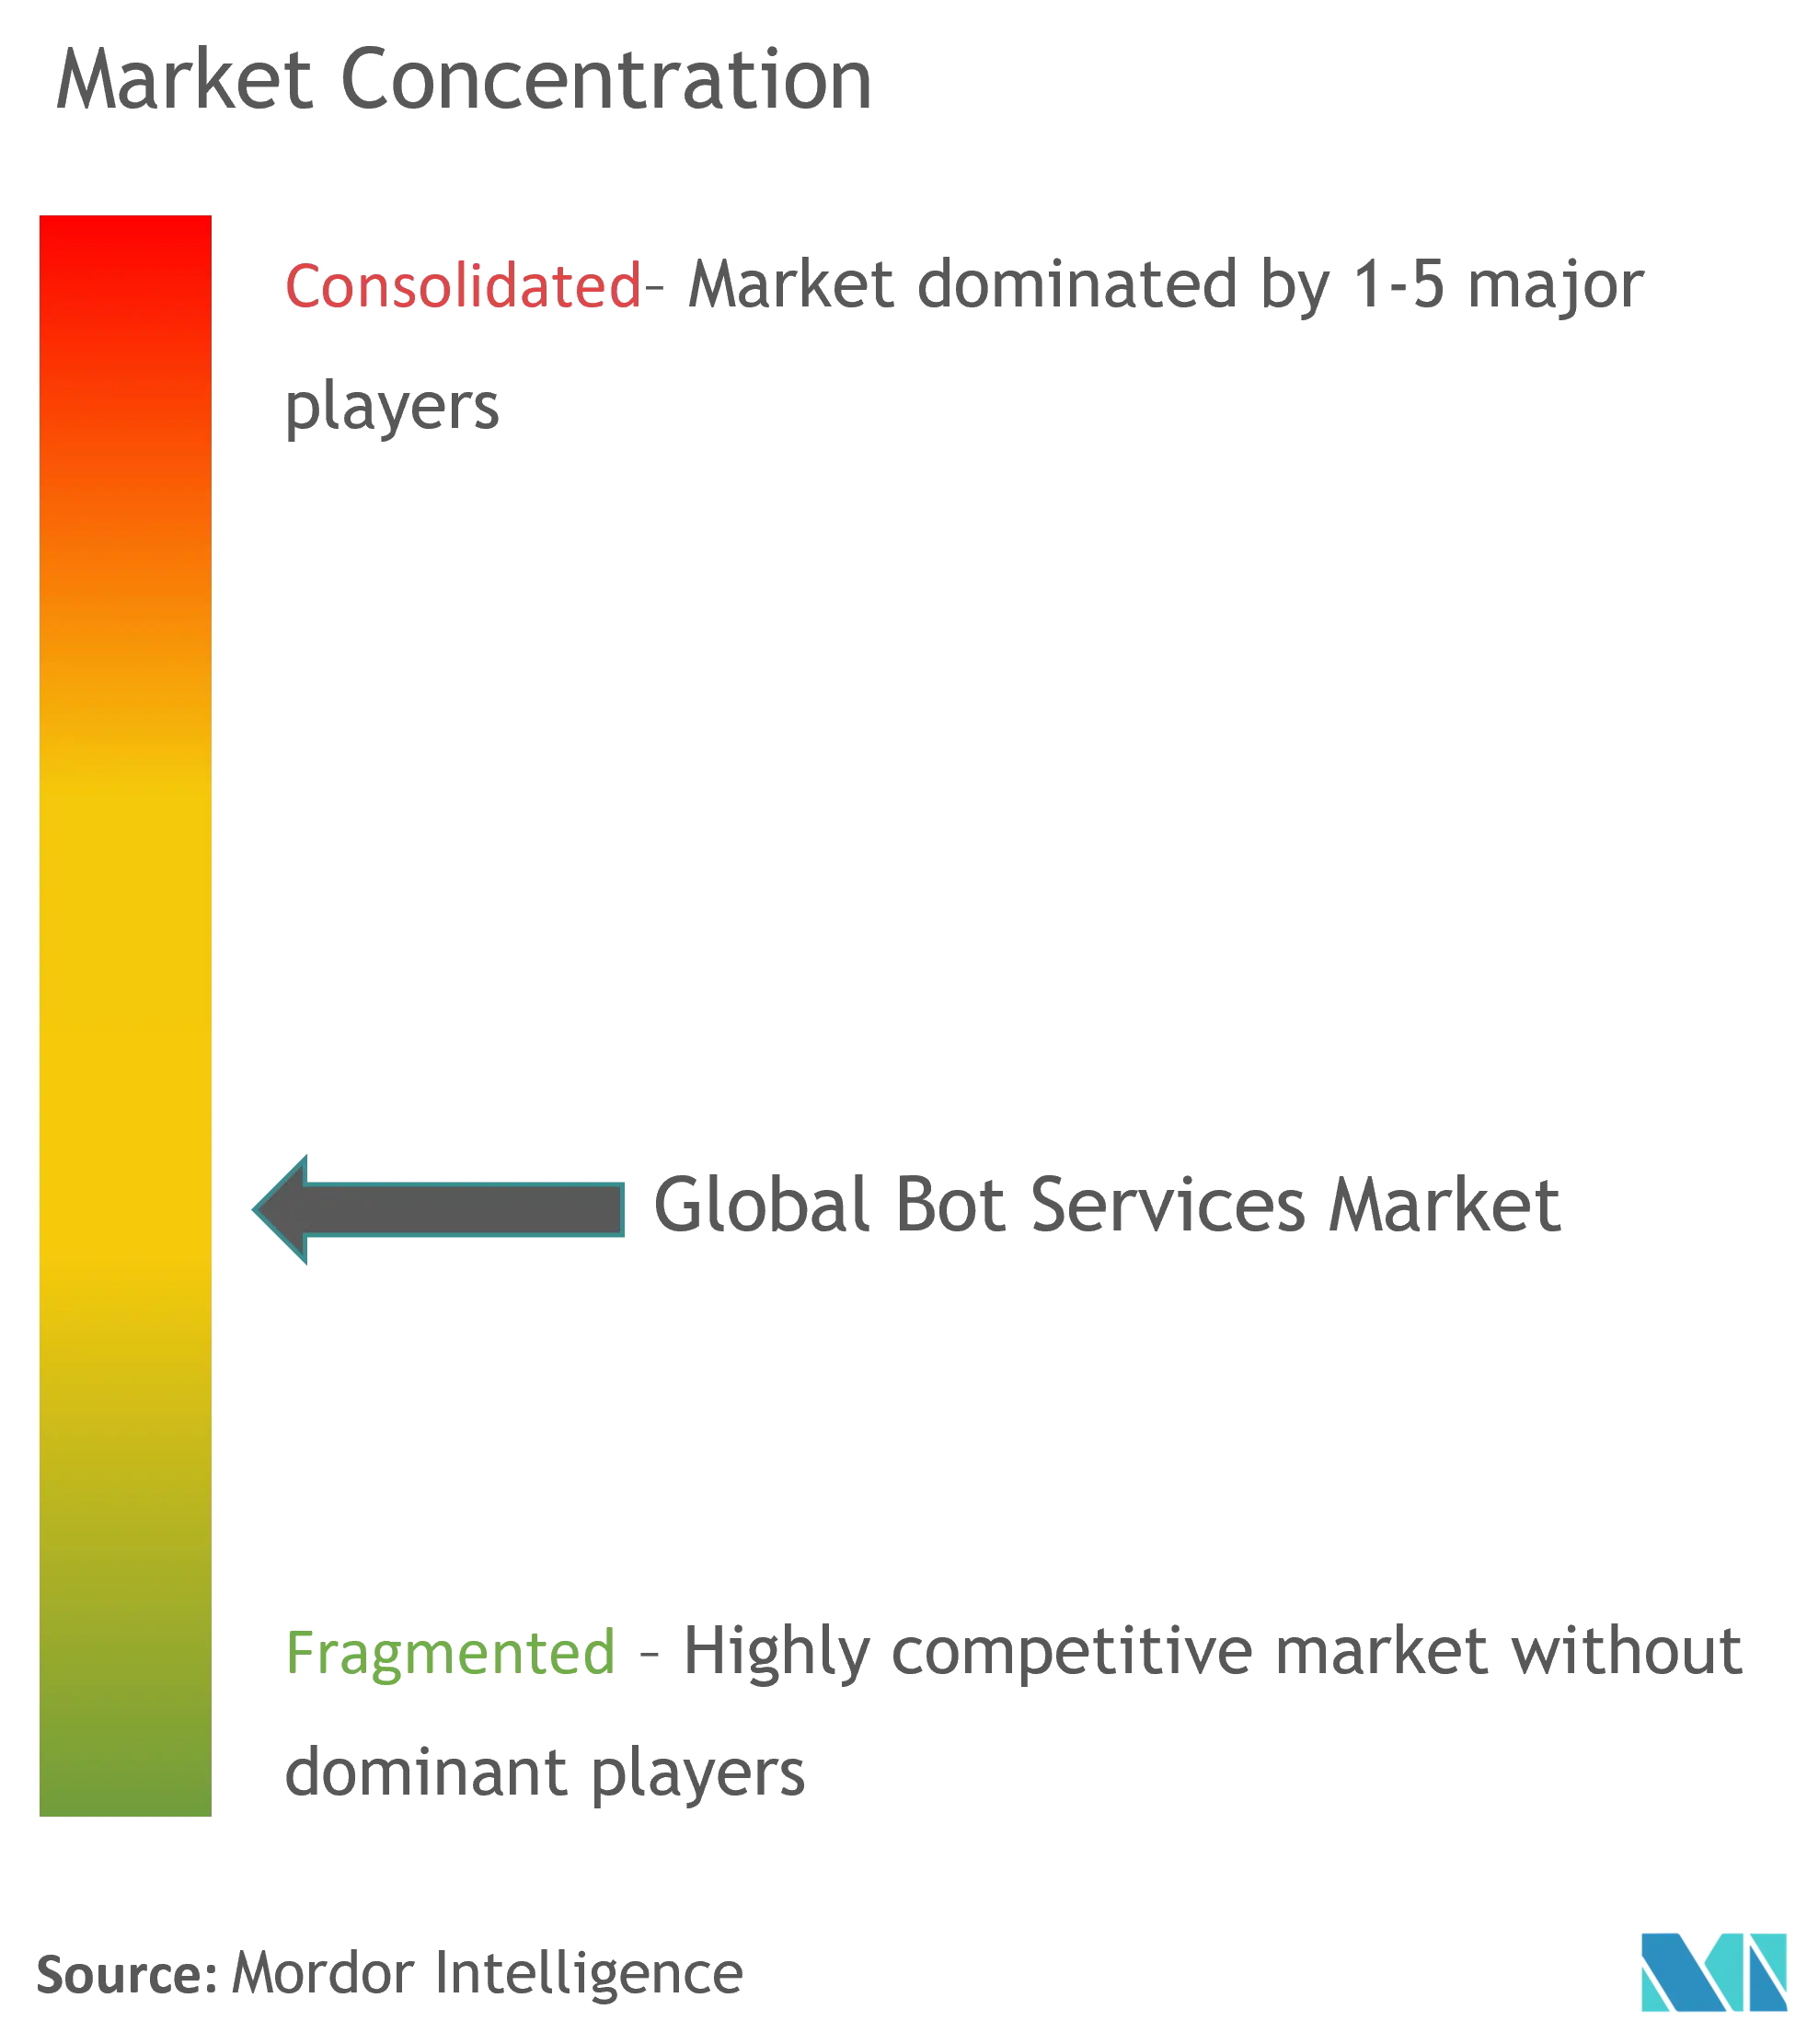 Bot Services Market